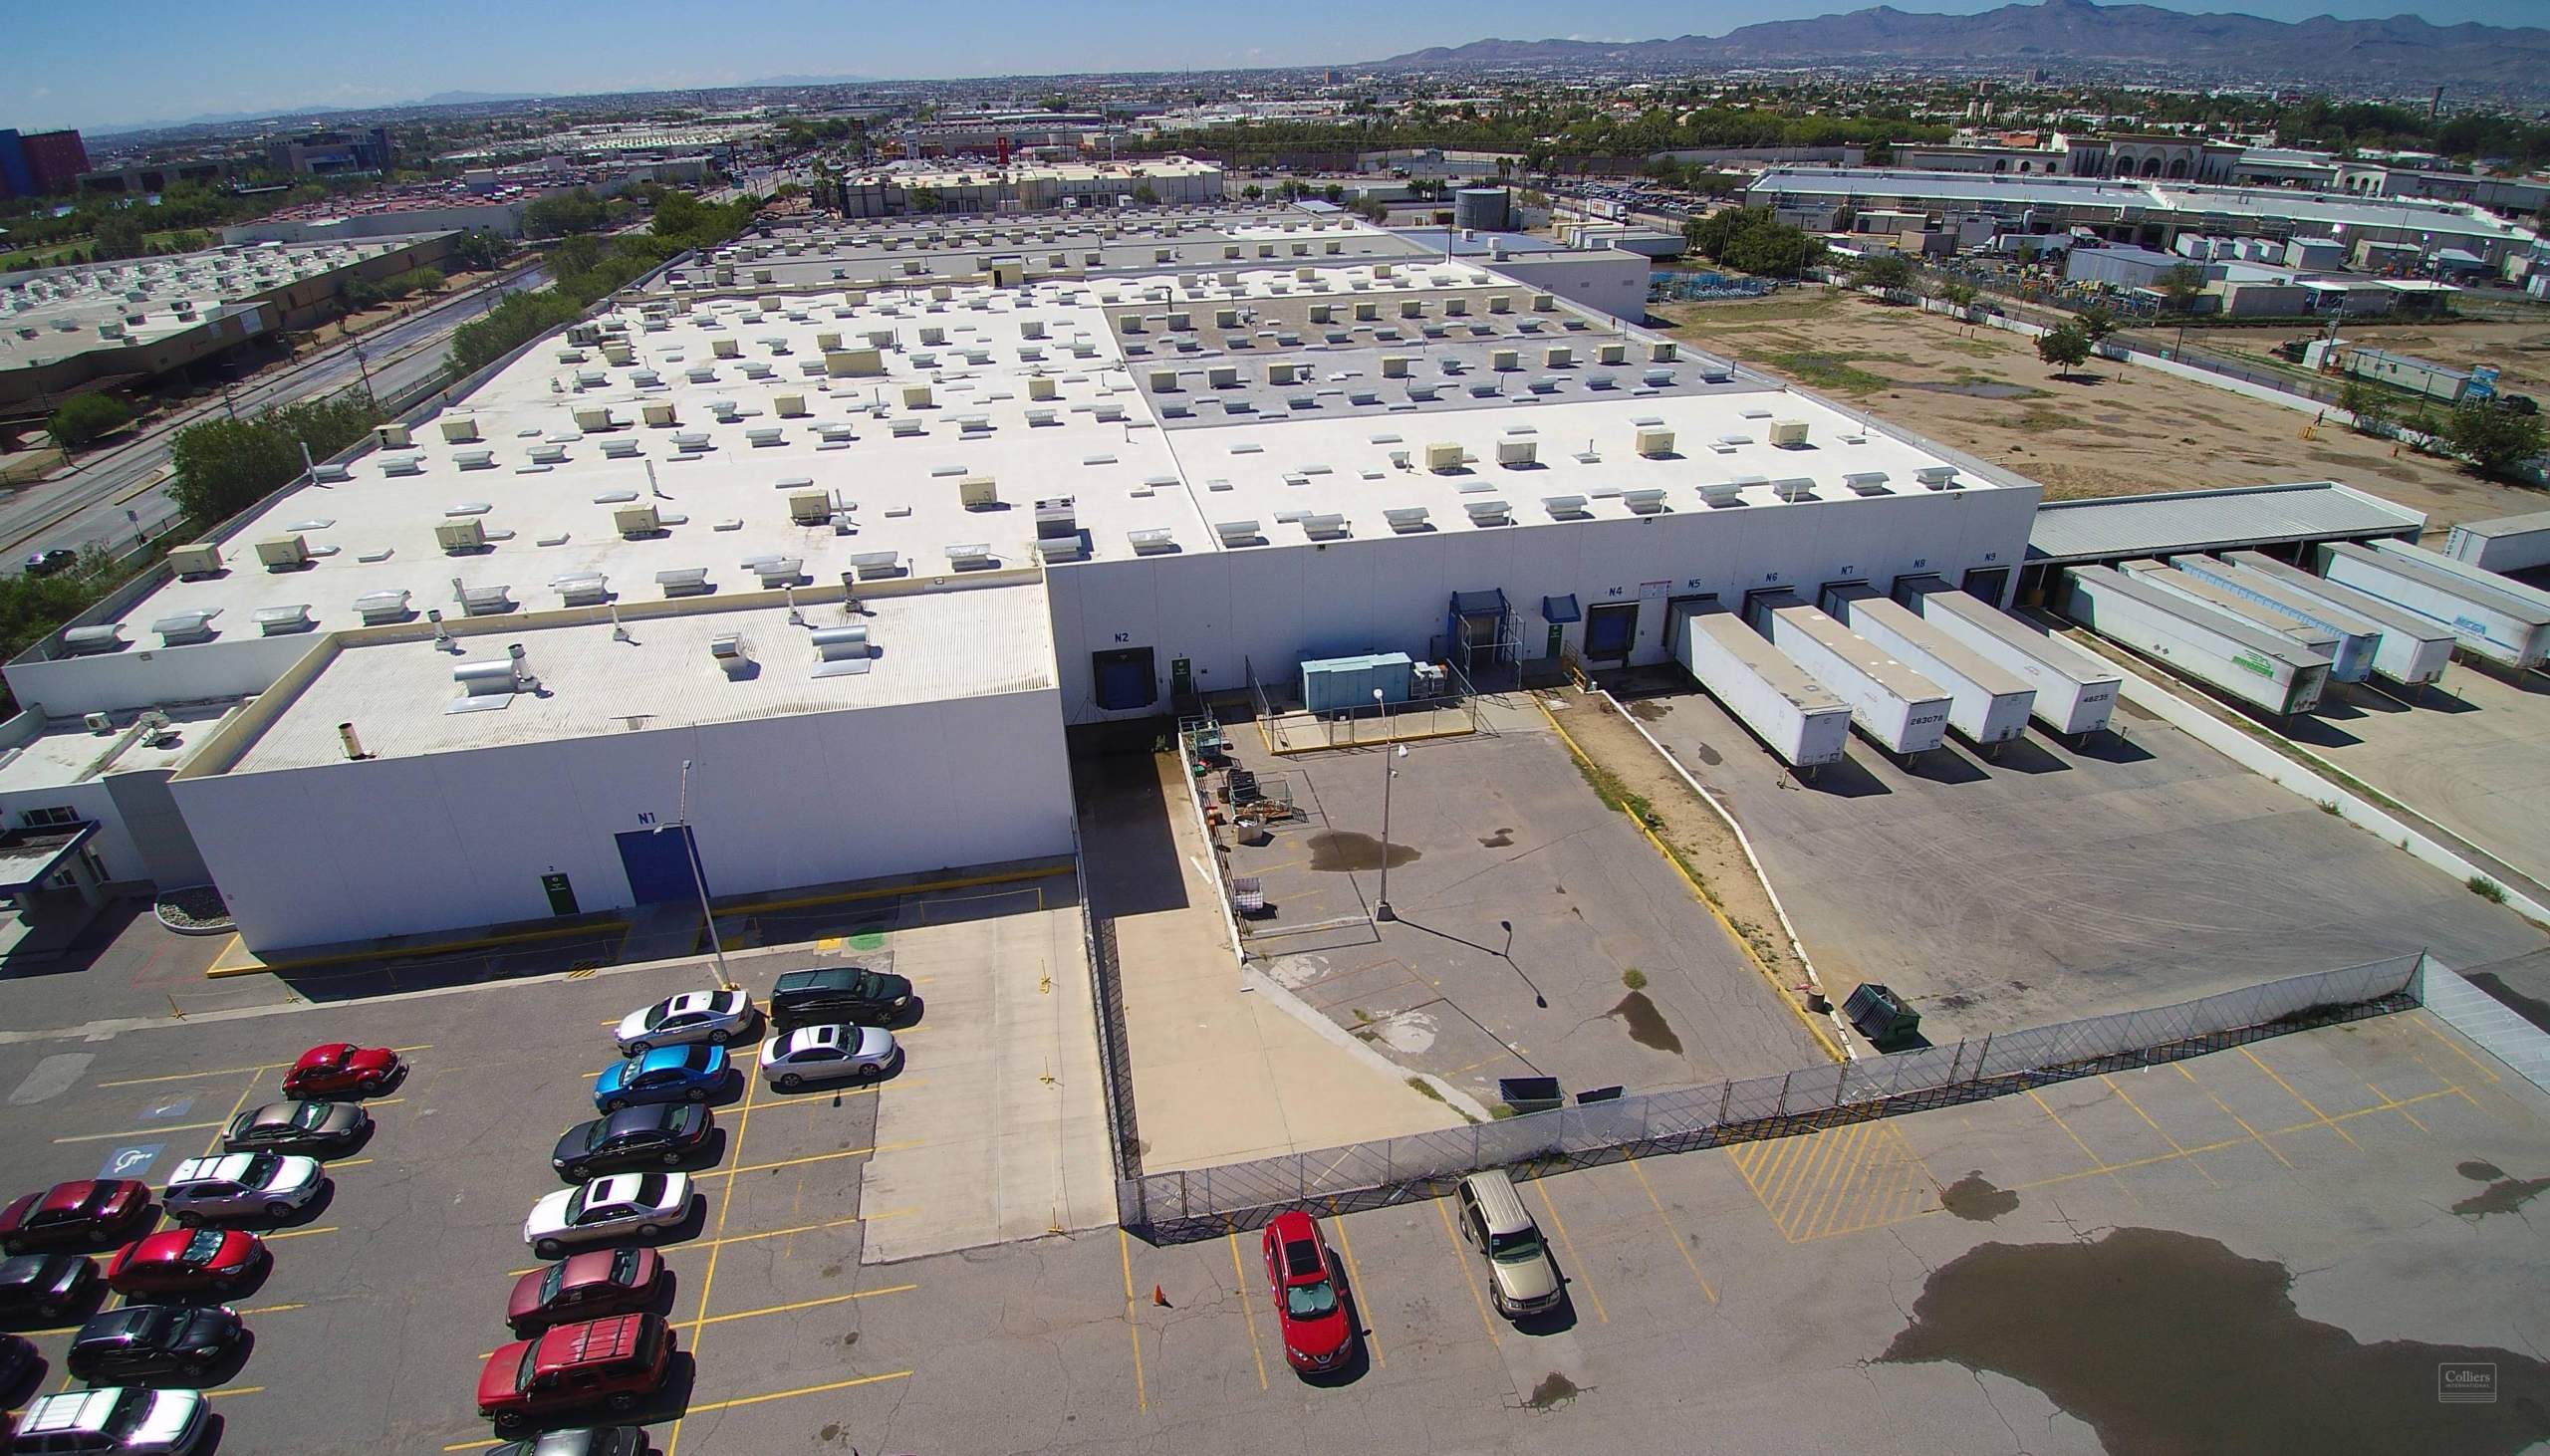 90% of companies remain closed in Juarez